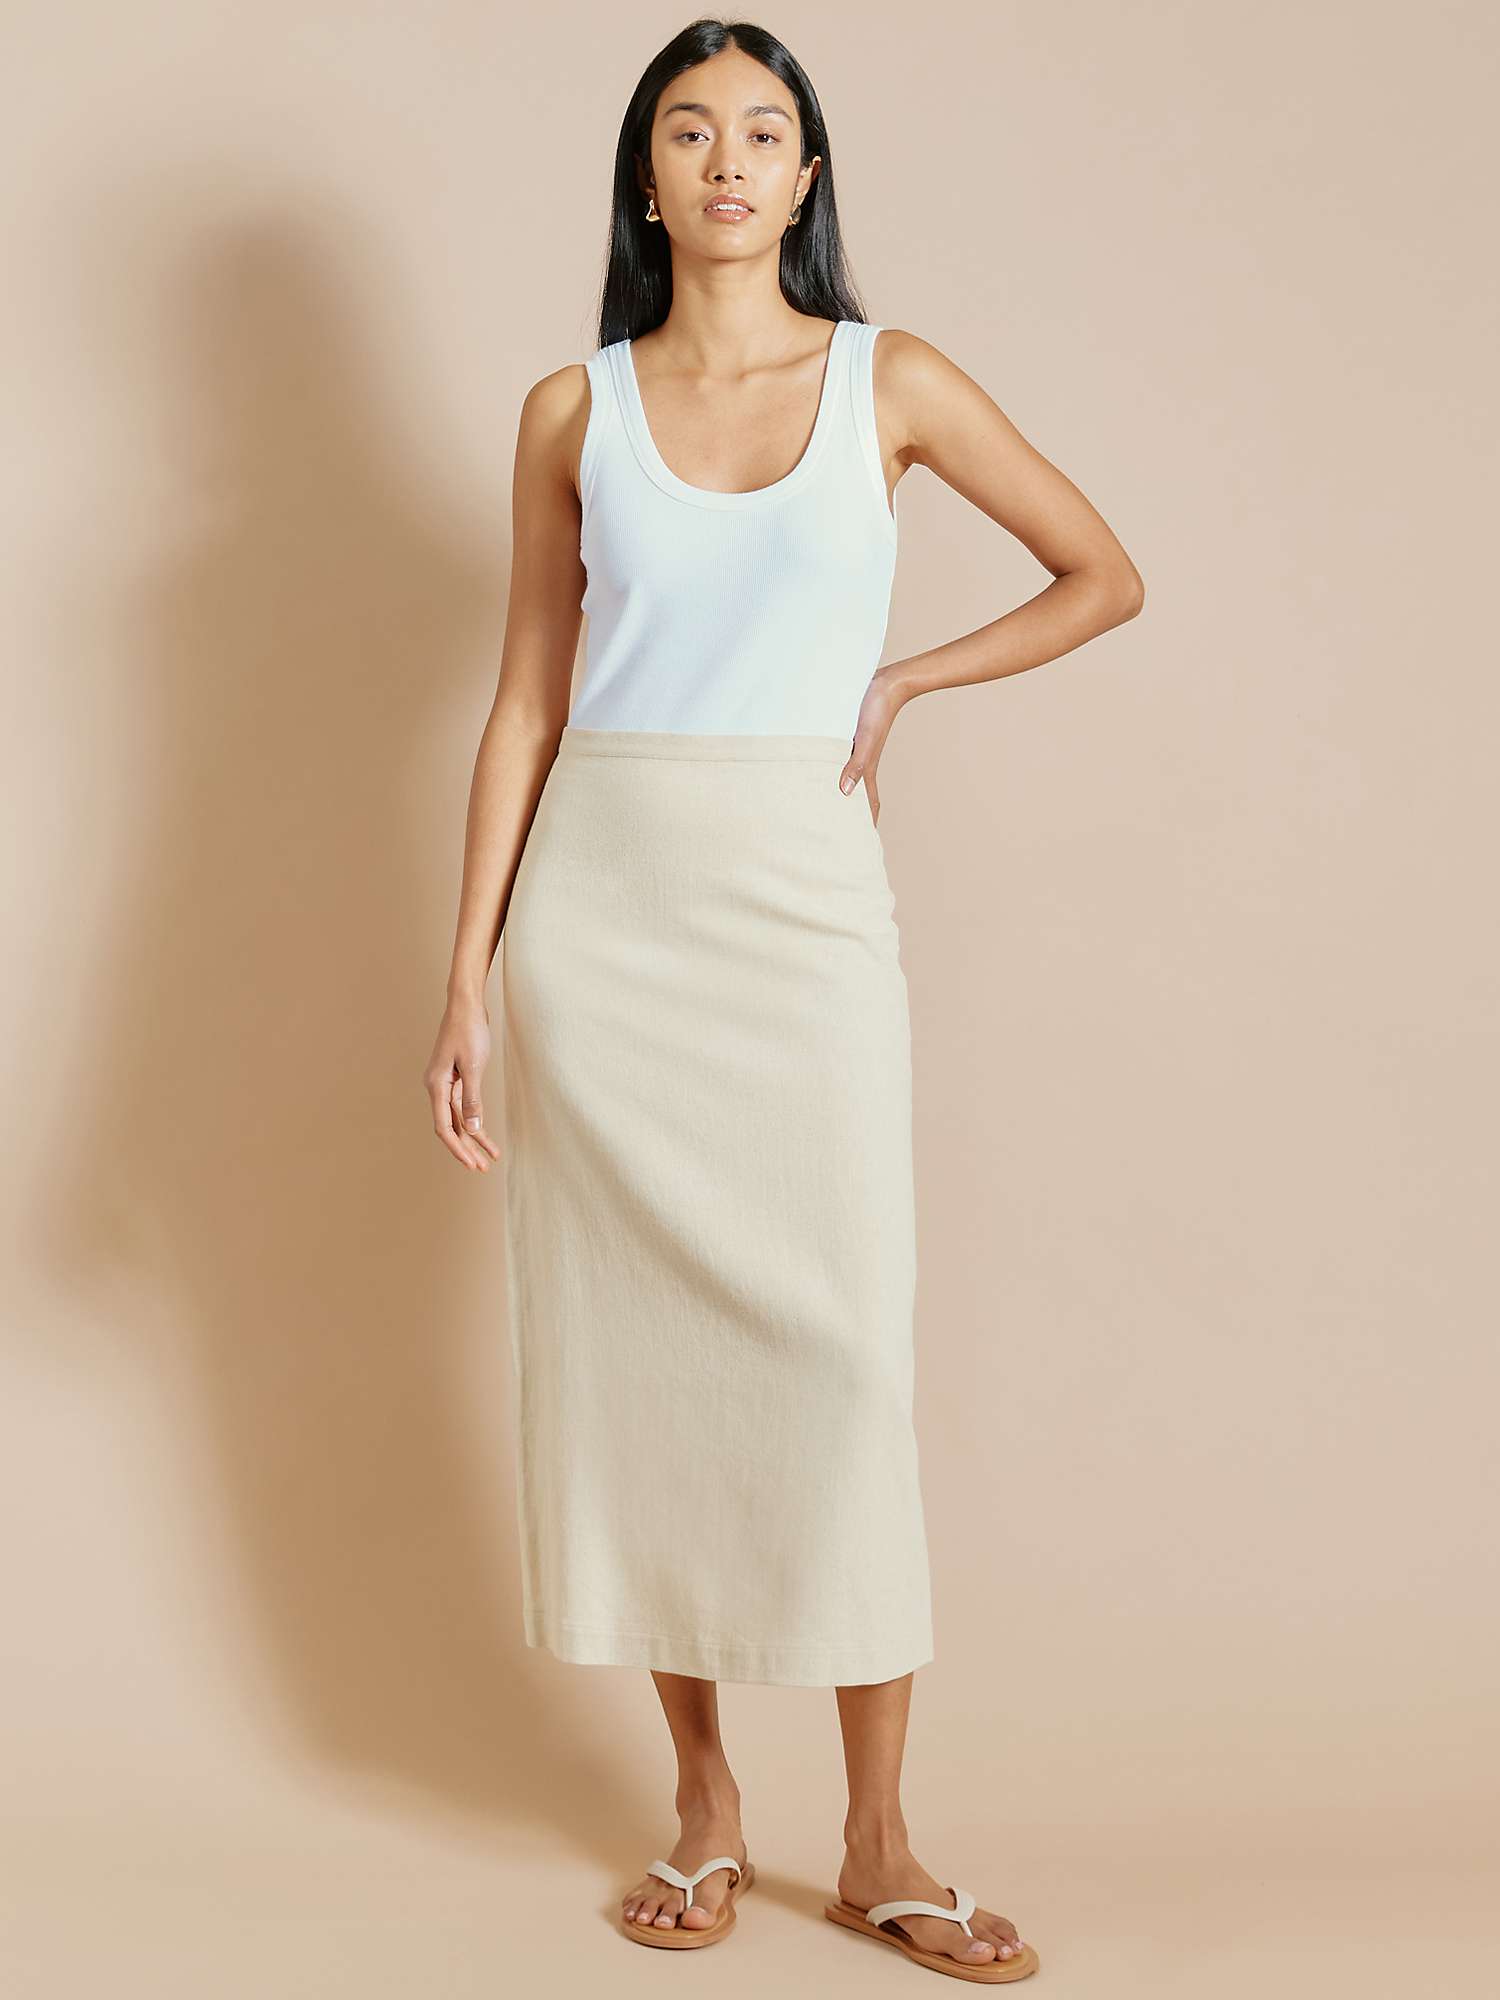 Buy Albaray Linen Twill Blend Midi Pencil Skirt, Sand Online at johnlewis.com